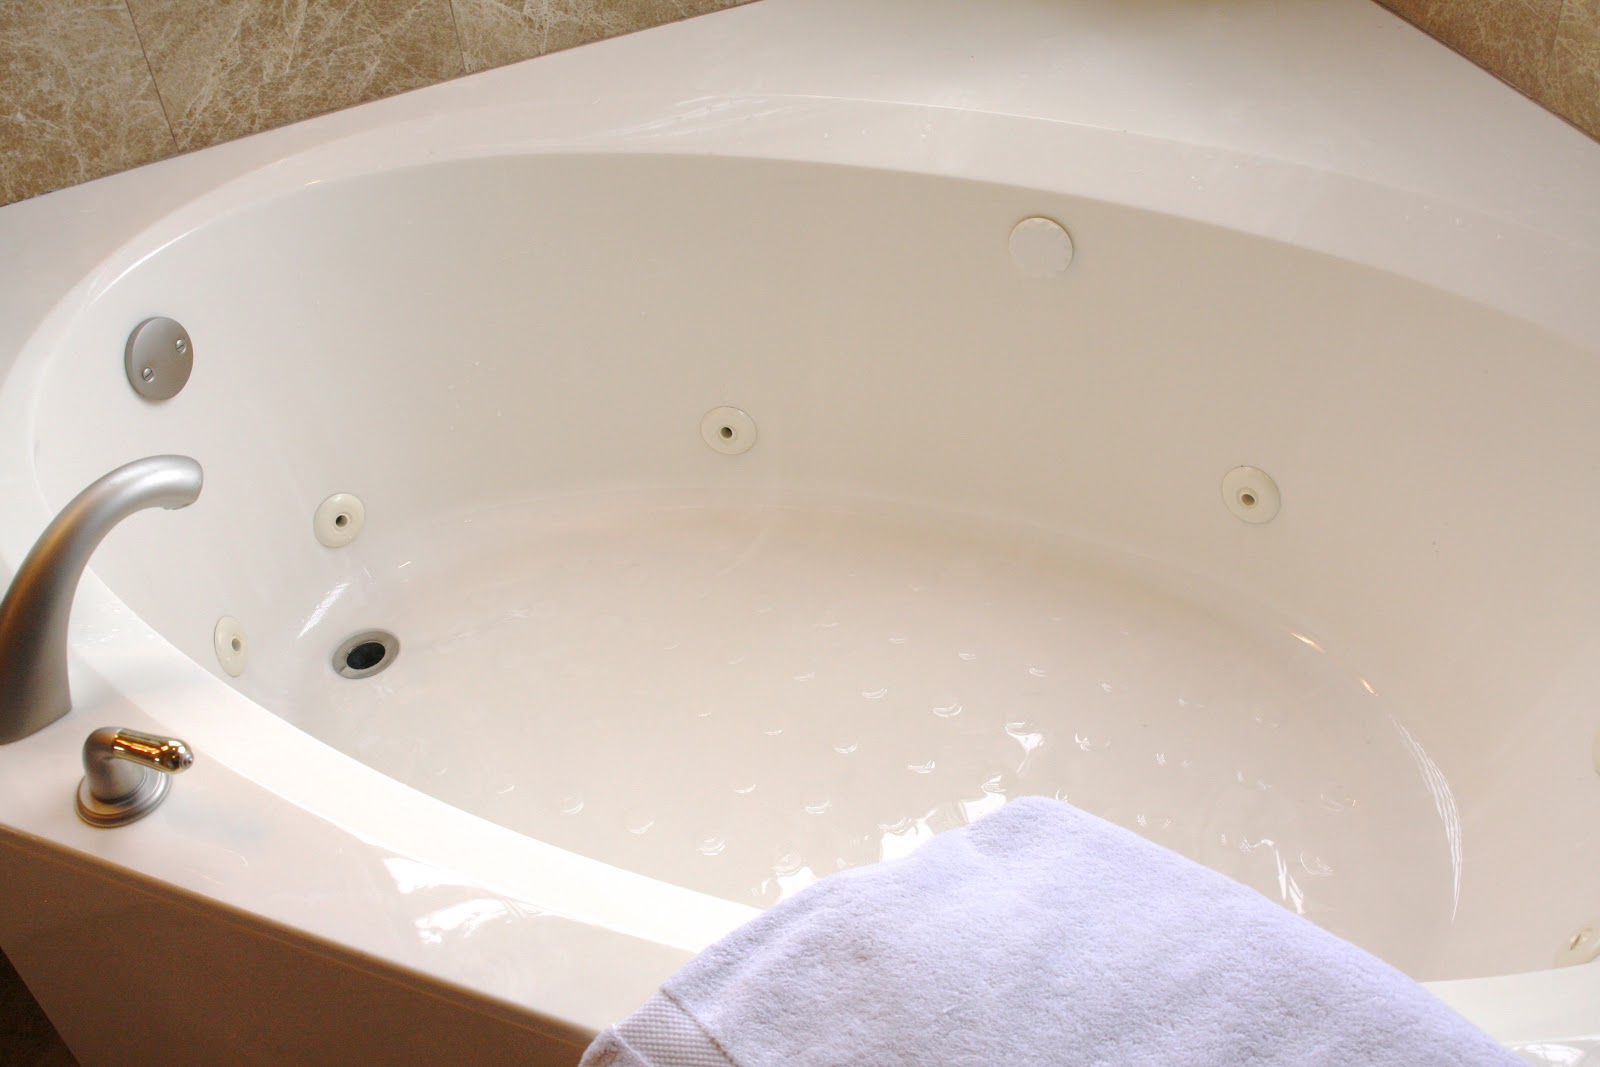 How To Clean Whirlpool Tub Jets, Turn Bathtub Into Whirlpool